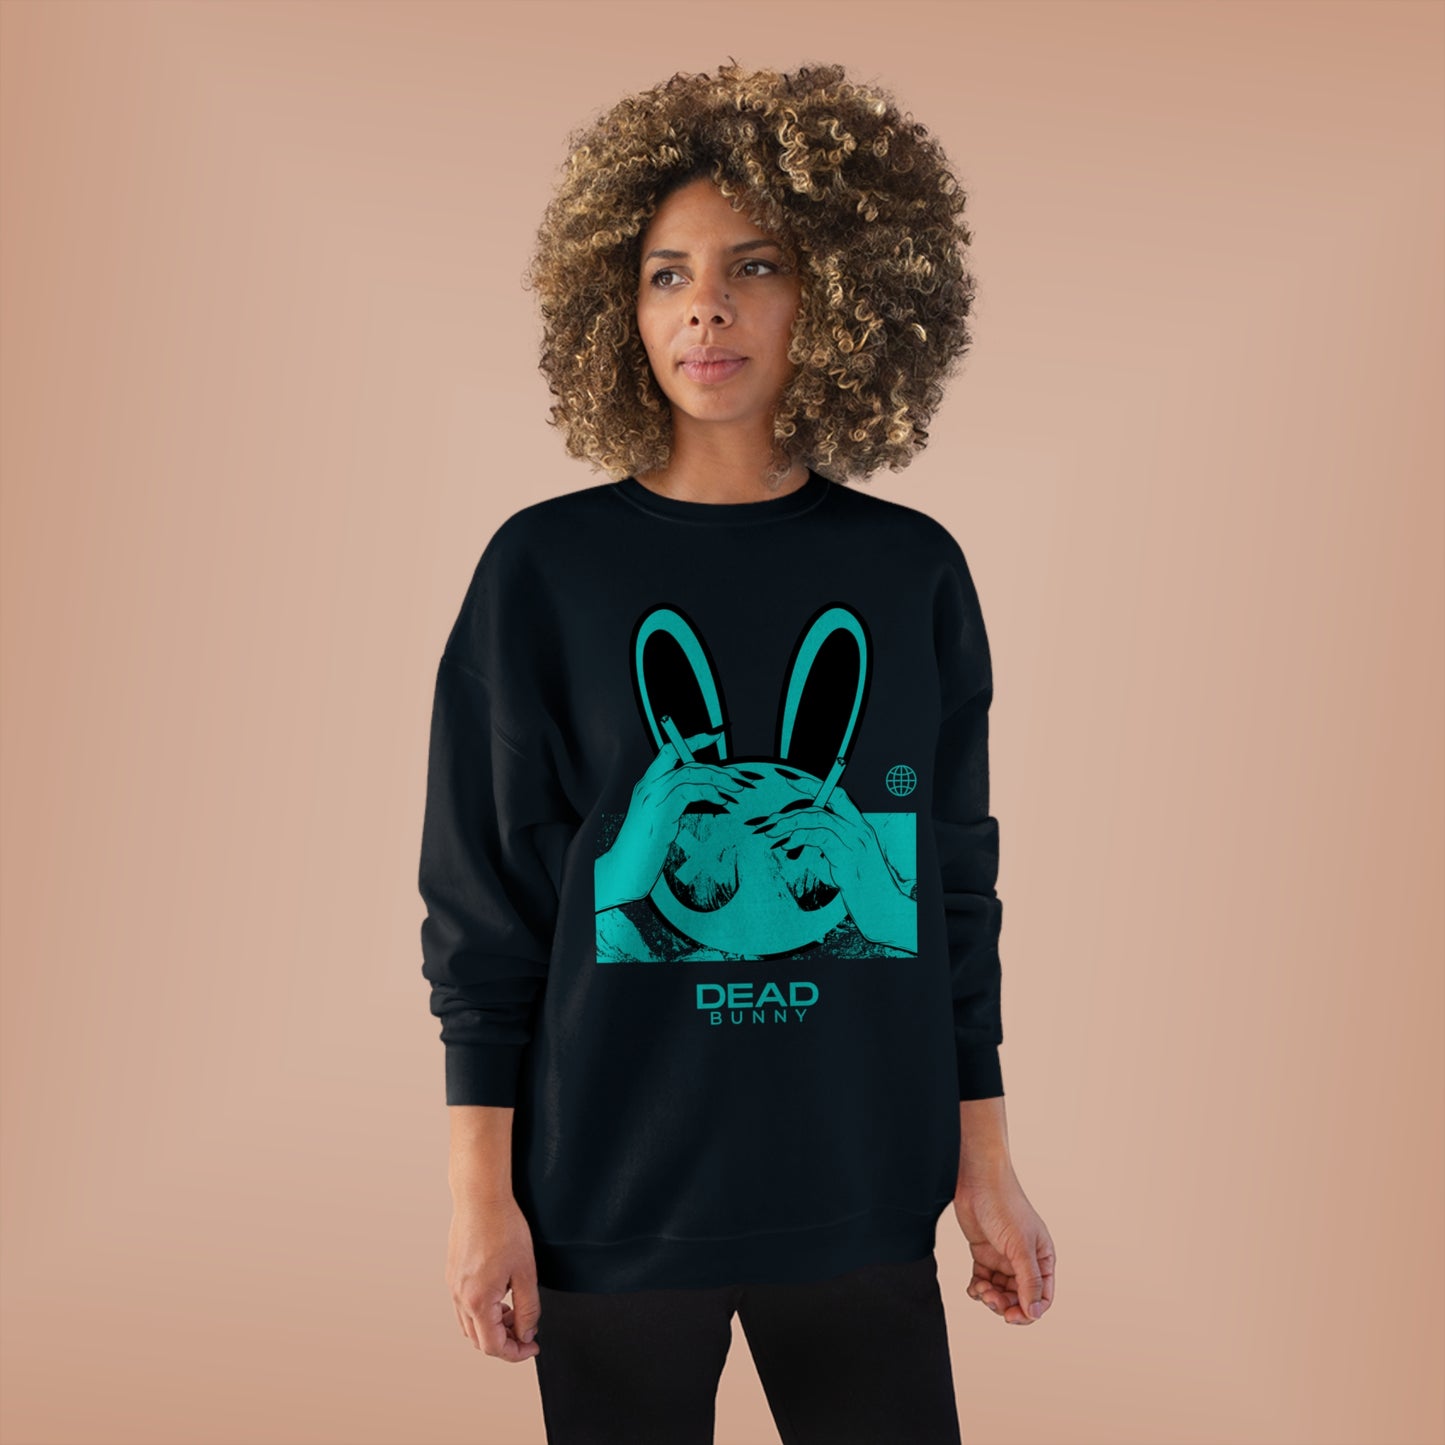 "Dead Bunny" by Shinobi Sweatshirt